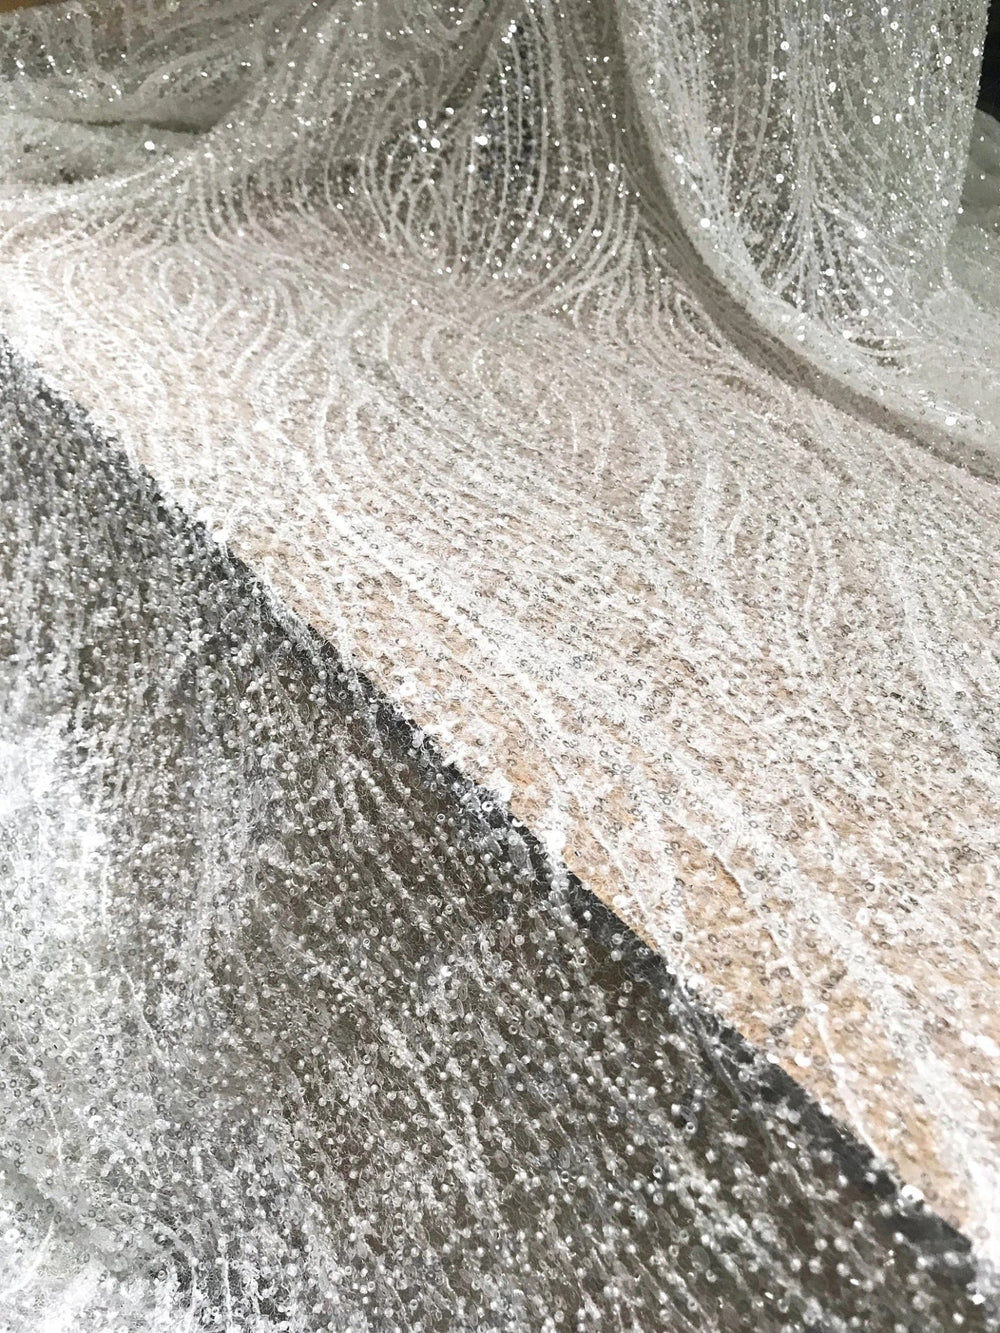 5 YARDS / Full Beaded Glitter Embroidery Mesh Lace Wedding Dress Fabric - Classic & Modern